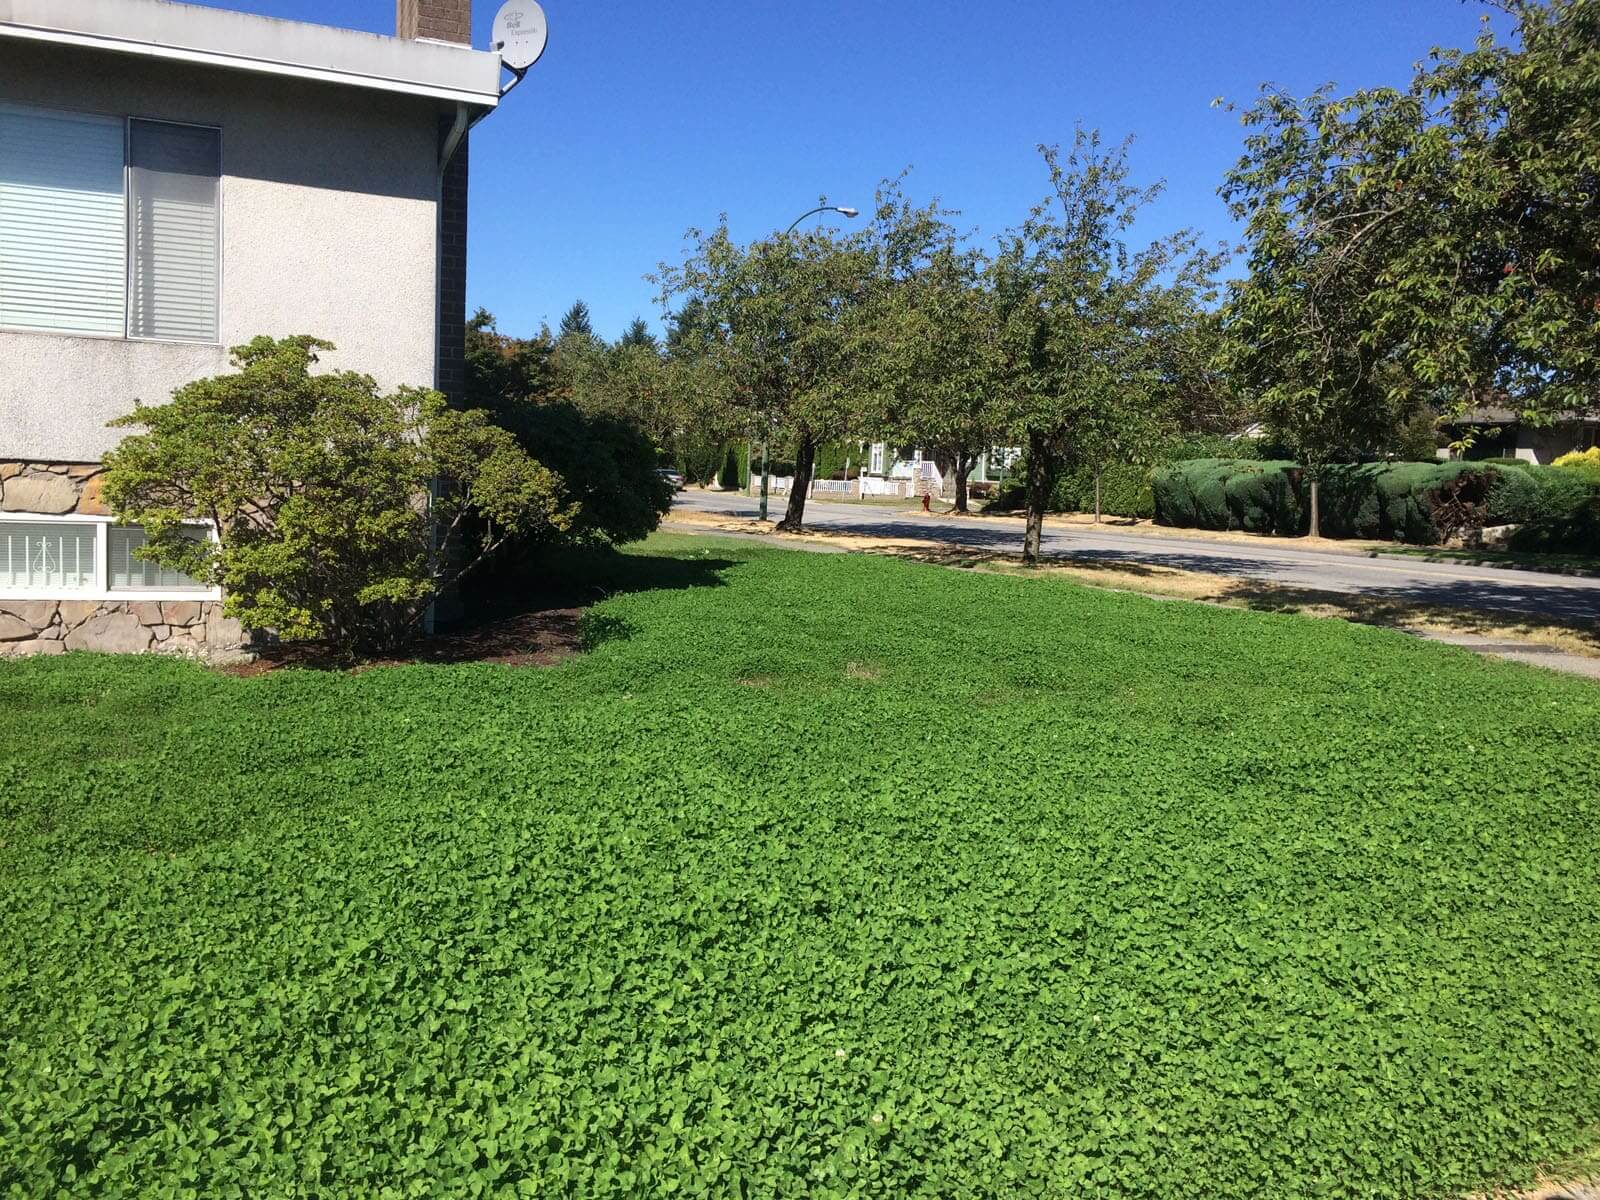 Elmhurst Drive - Micro clover lawn installation